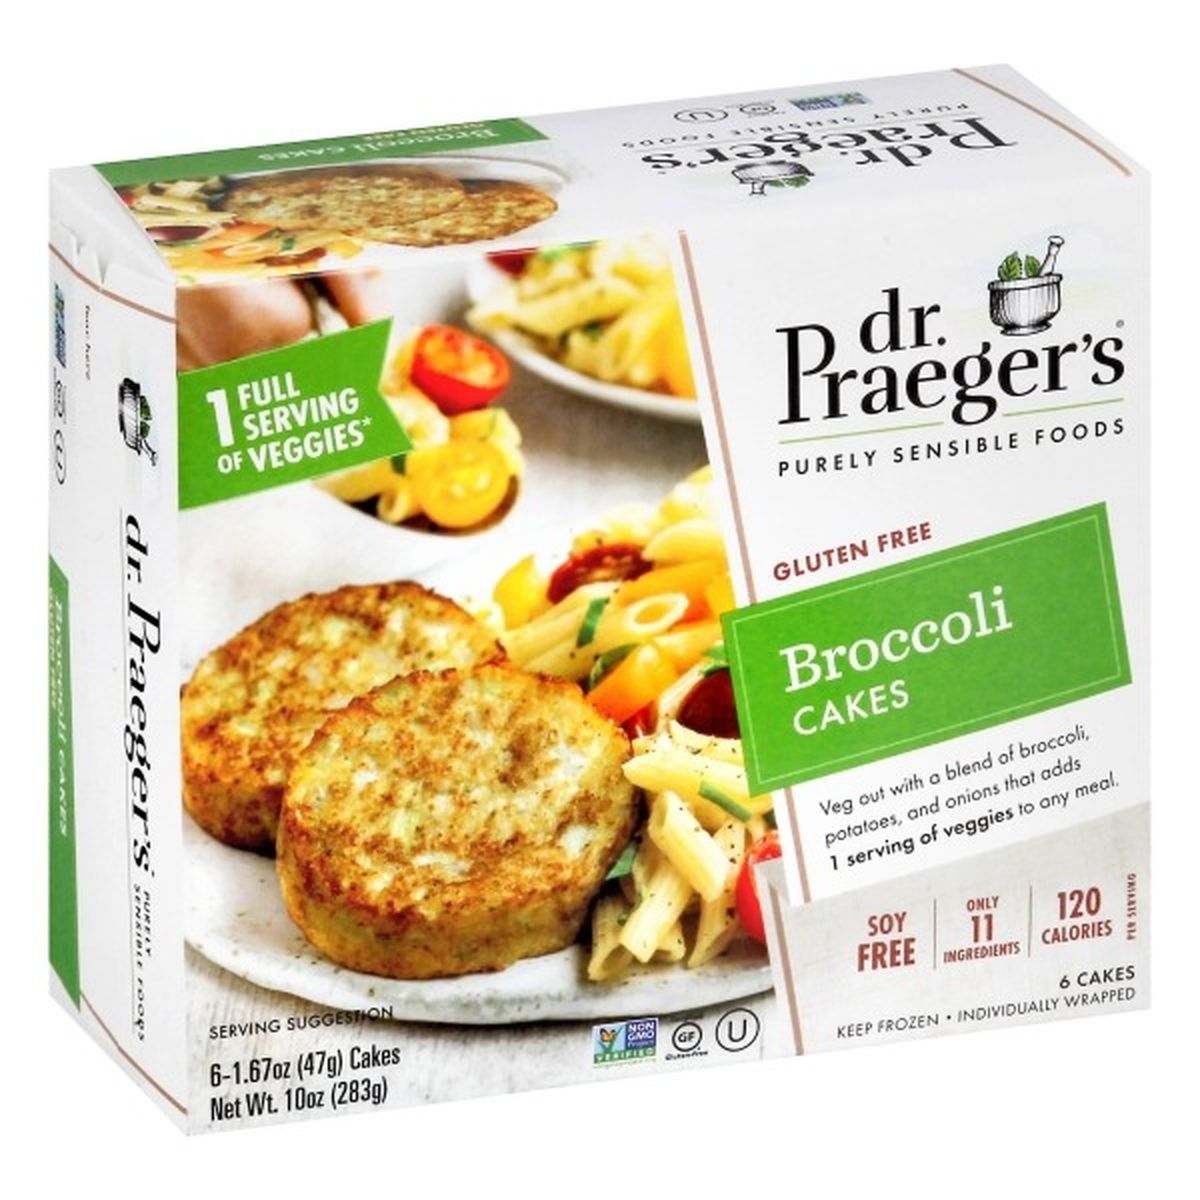 Calories in Dr. Praeger's Broccoli Cakes